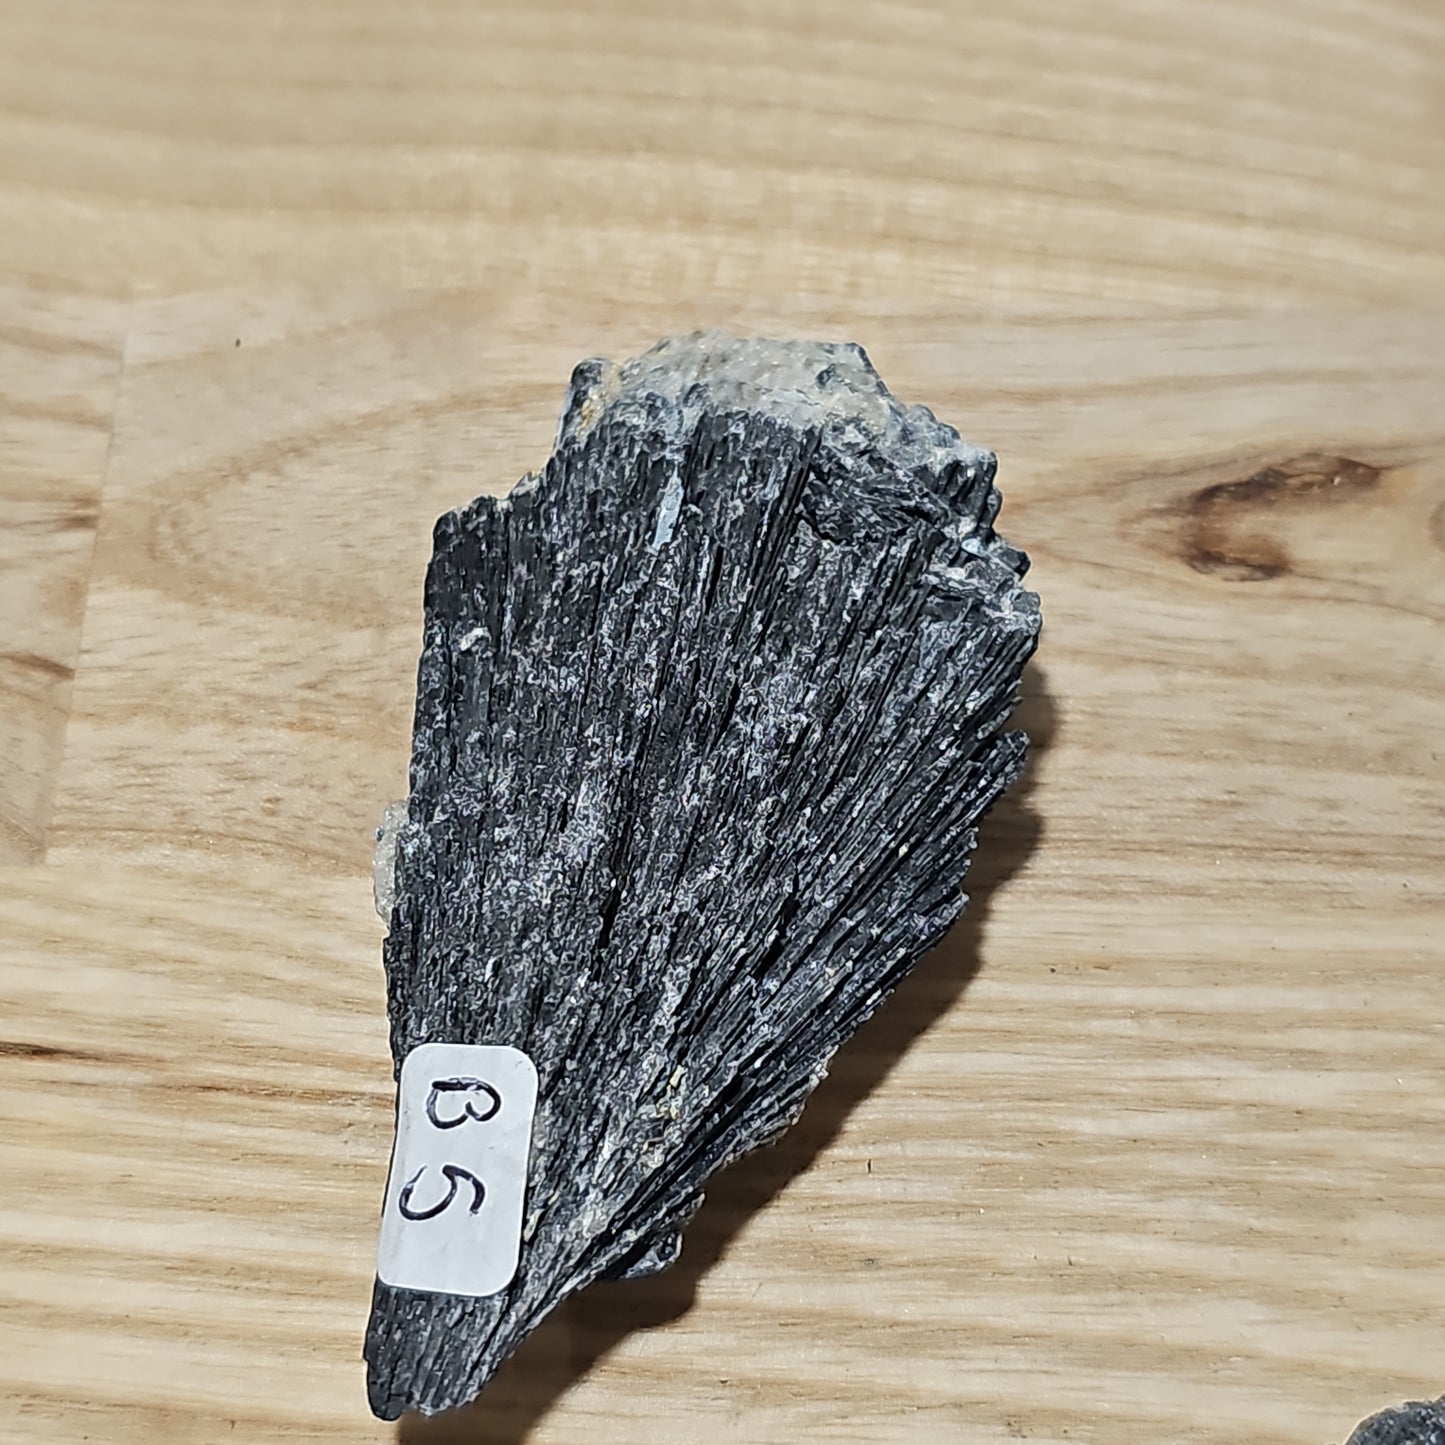 Black Kyanite - Raw pieces